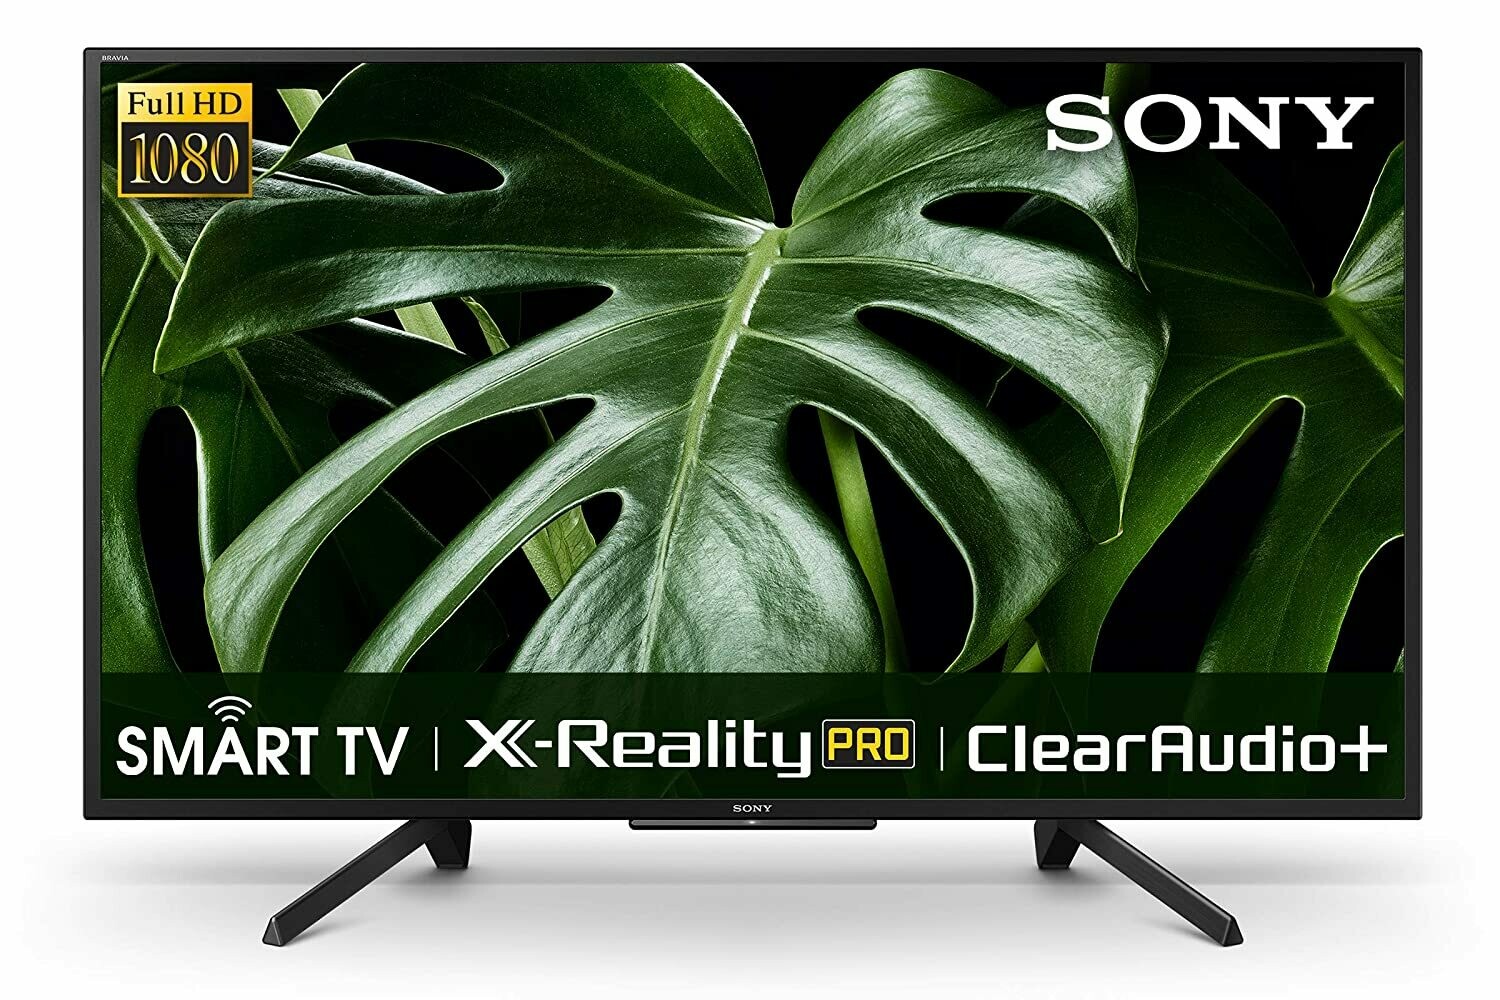 Sony Bravia | 108 cm (43 inches) | Full HD | LED Smart TV | KLV-43W672G